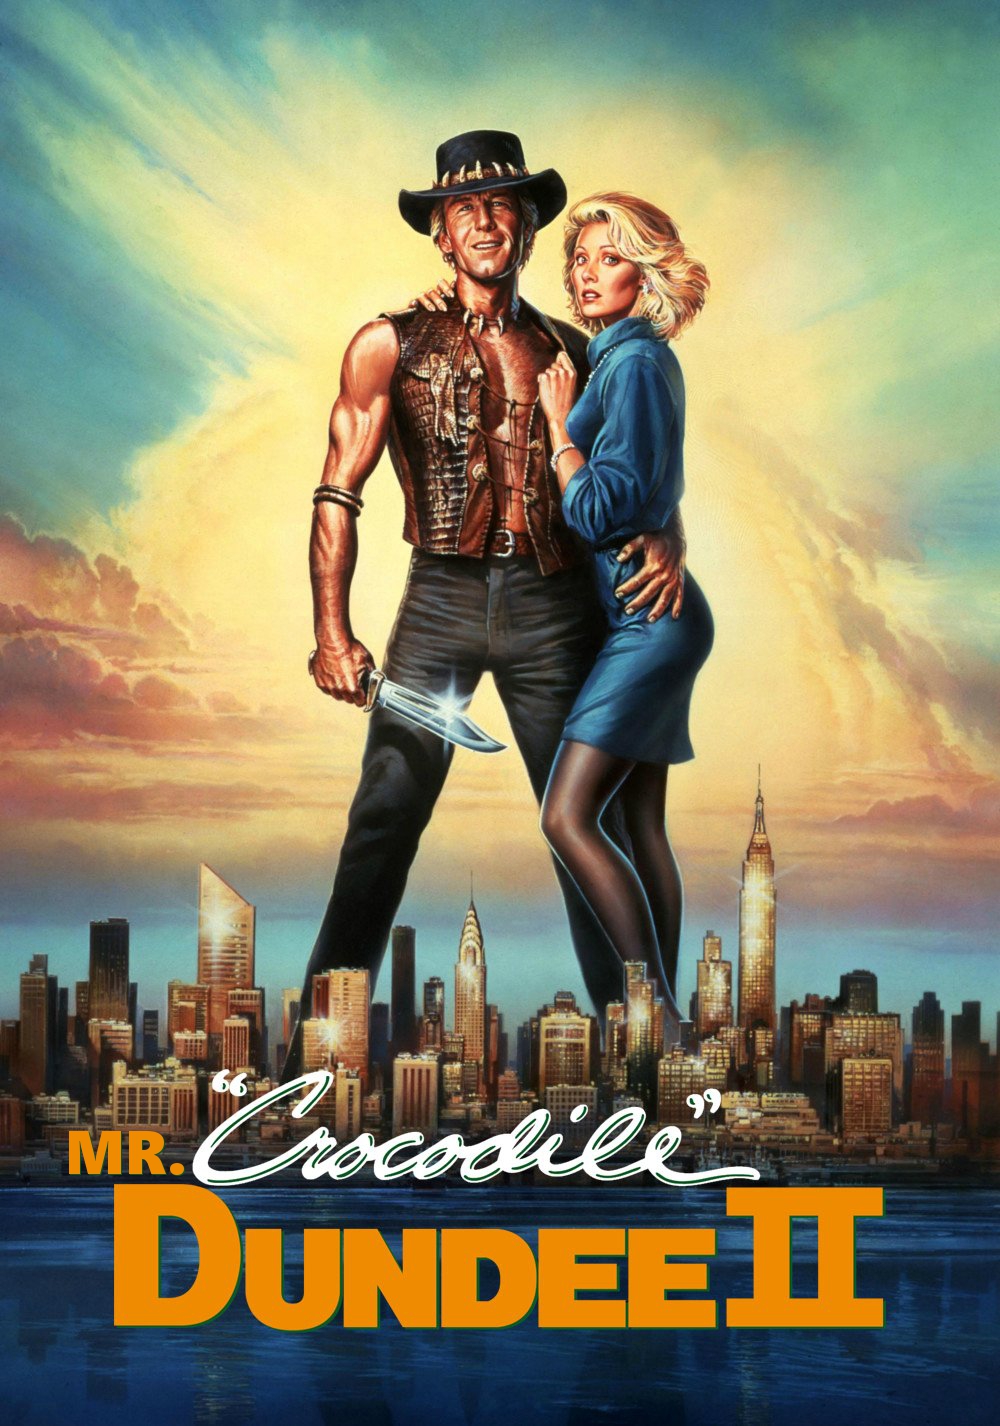 Mr. Crocodile Dundee 2 [HD] (1988)